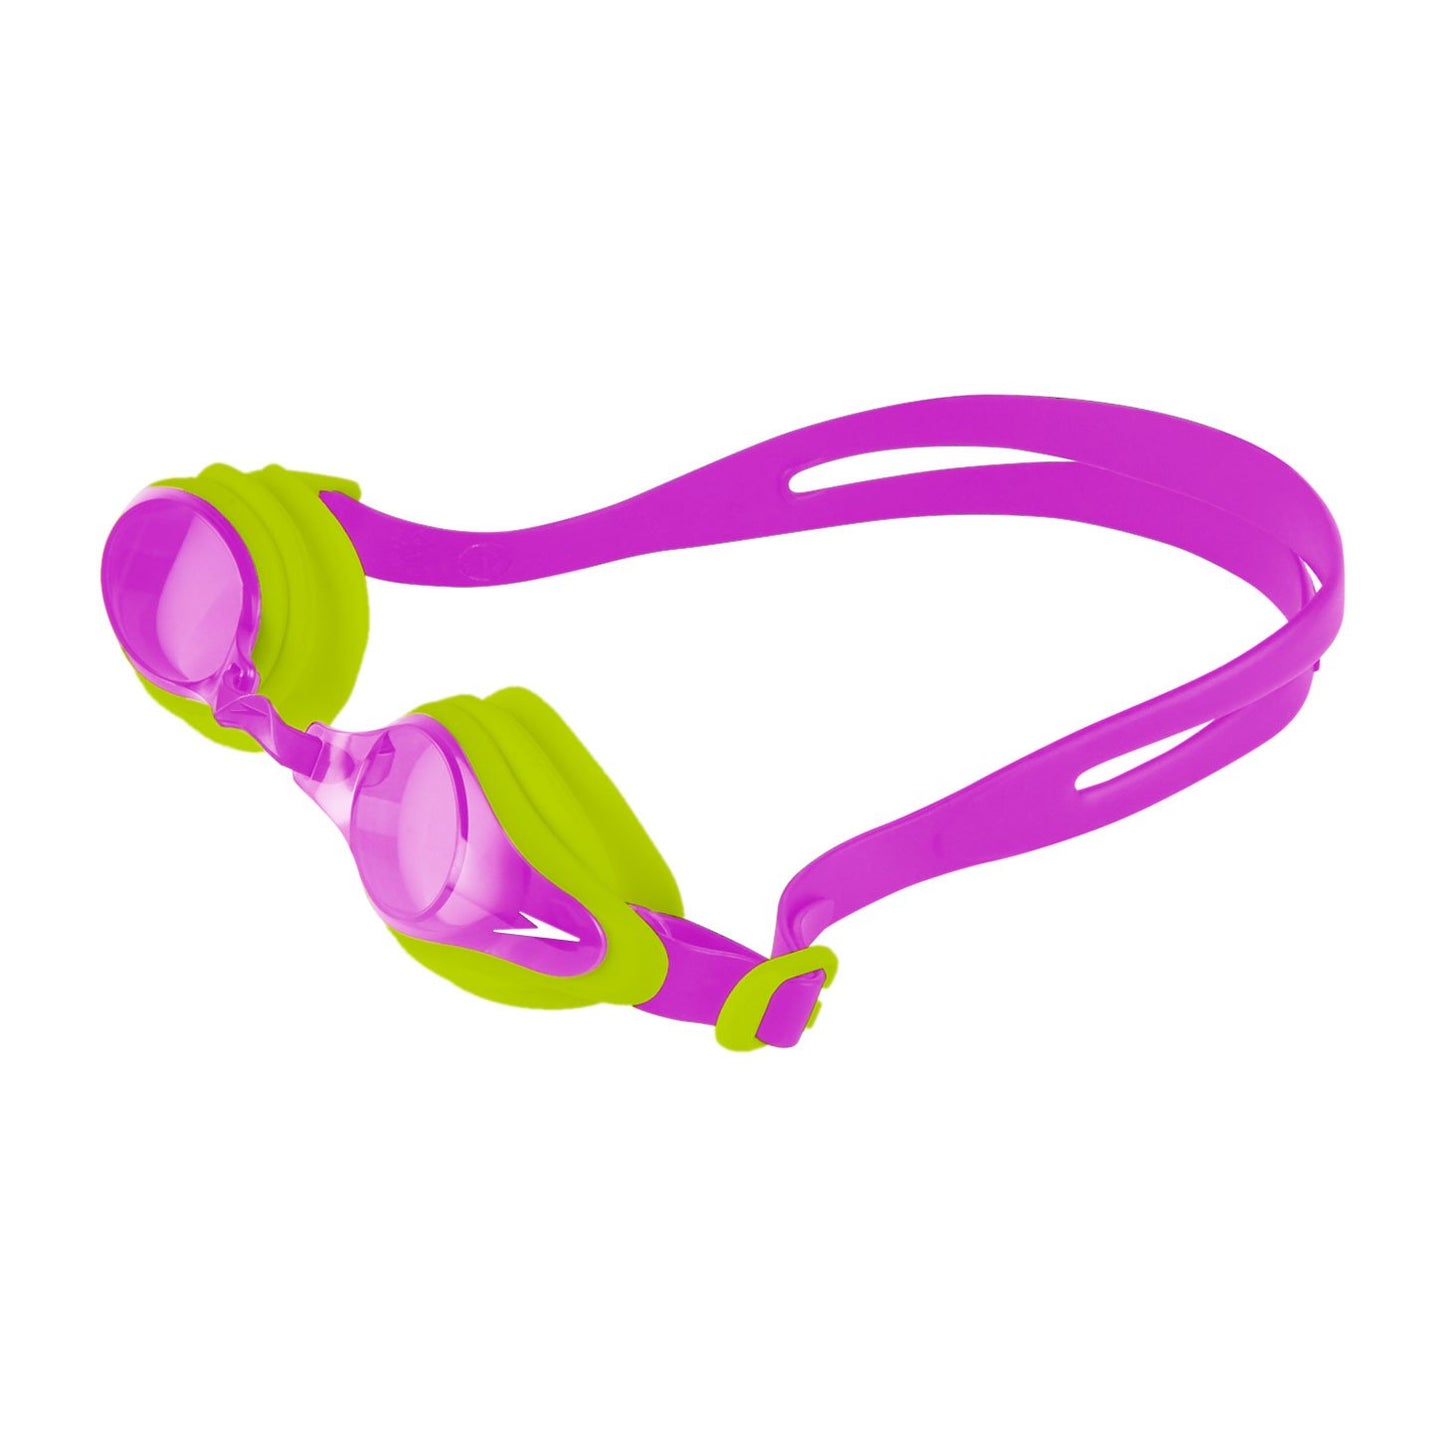 Speedo 811318B971 Blend Mariner Supreme Goggles, Kids (Multicolor) - Best Price online Prokicksports.com